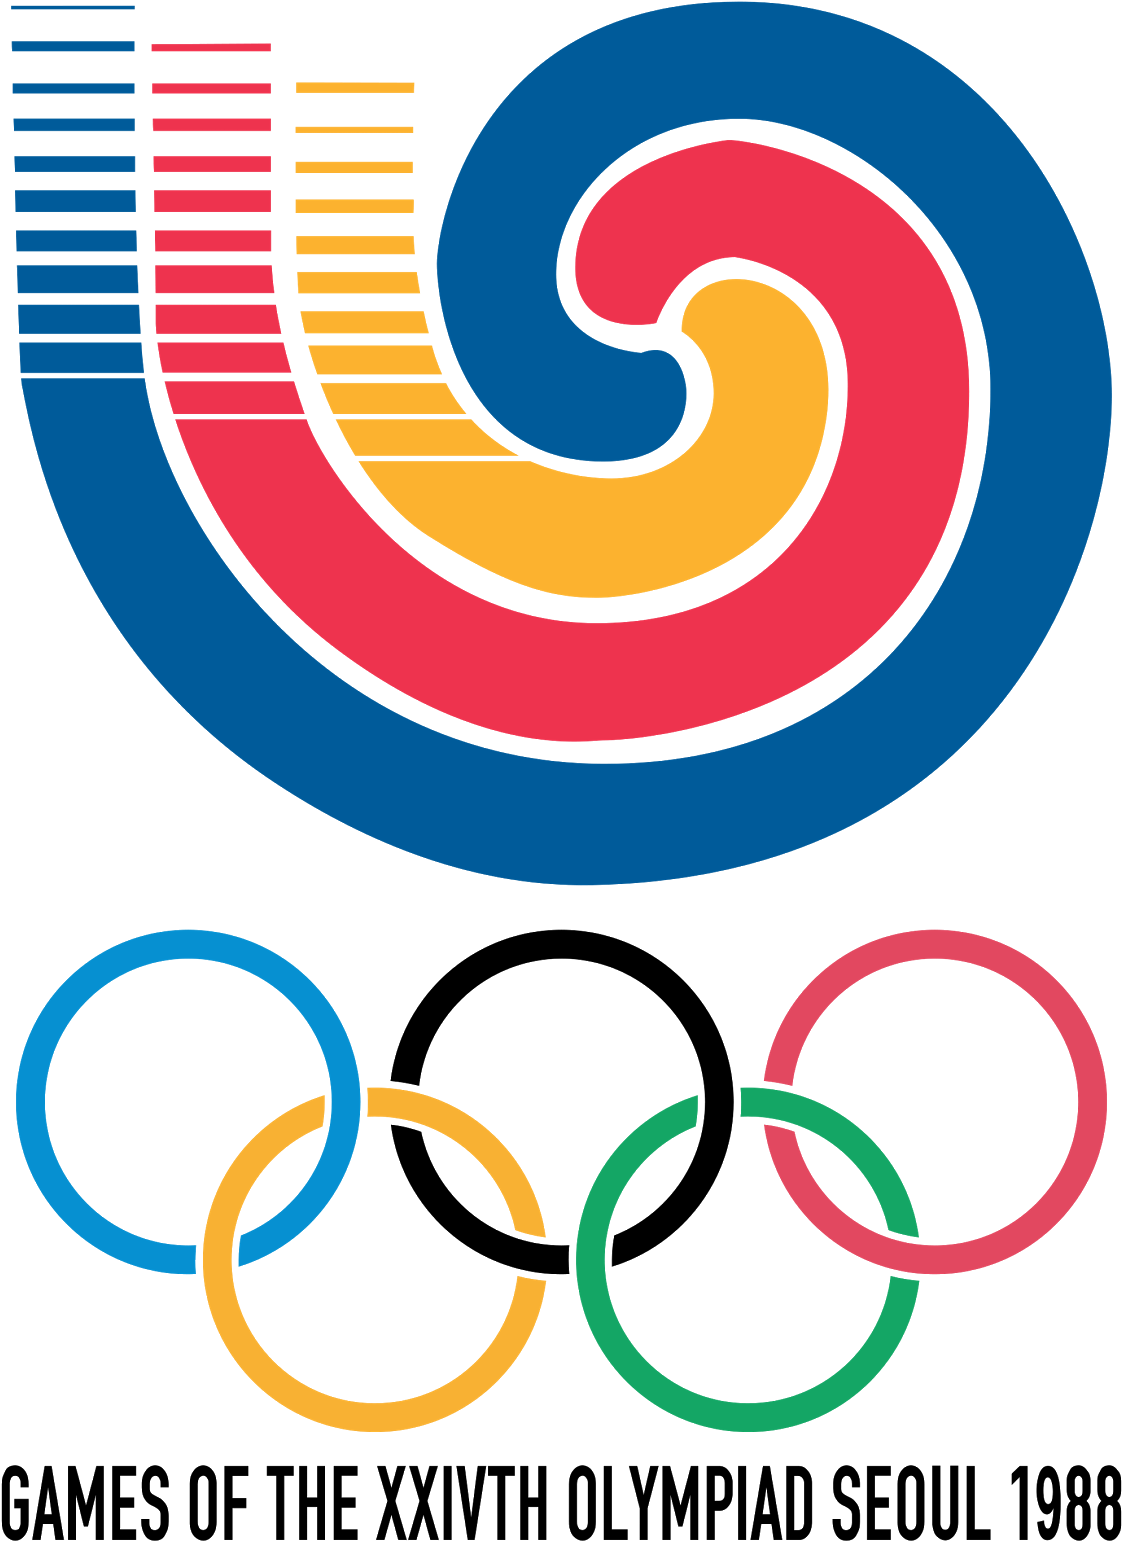 Seoul Olympics Logo - 1988 Olympics (2200x1600)